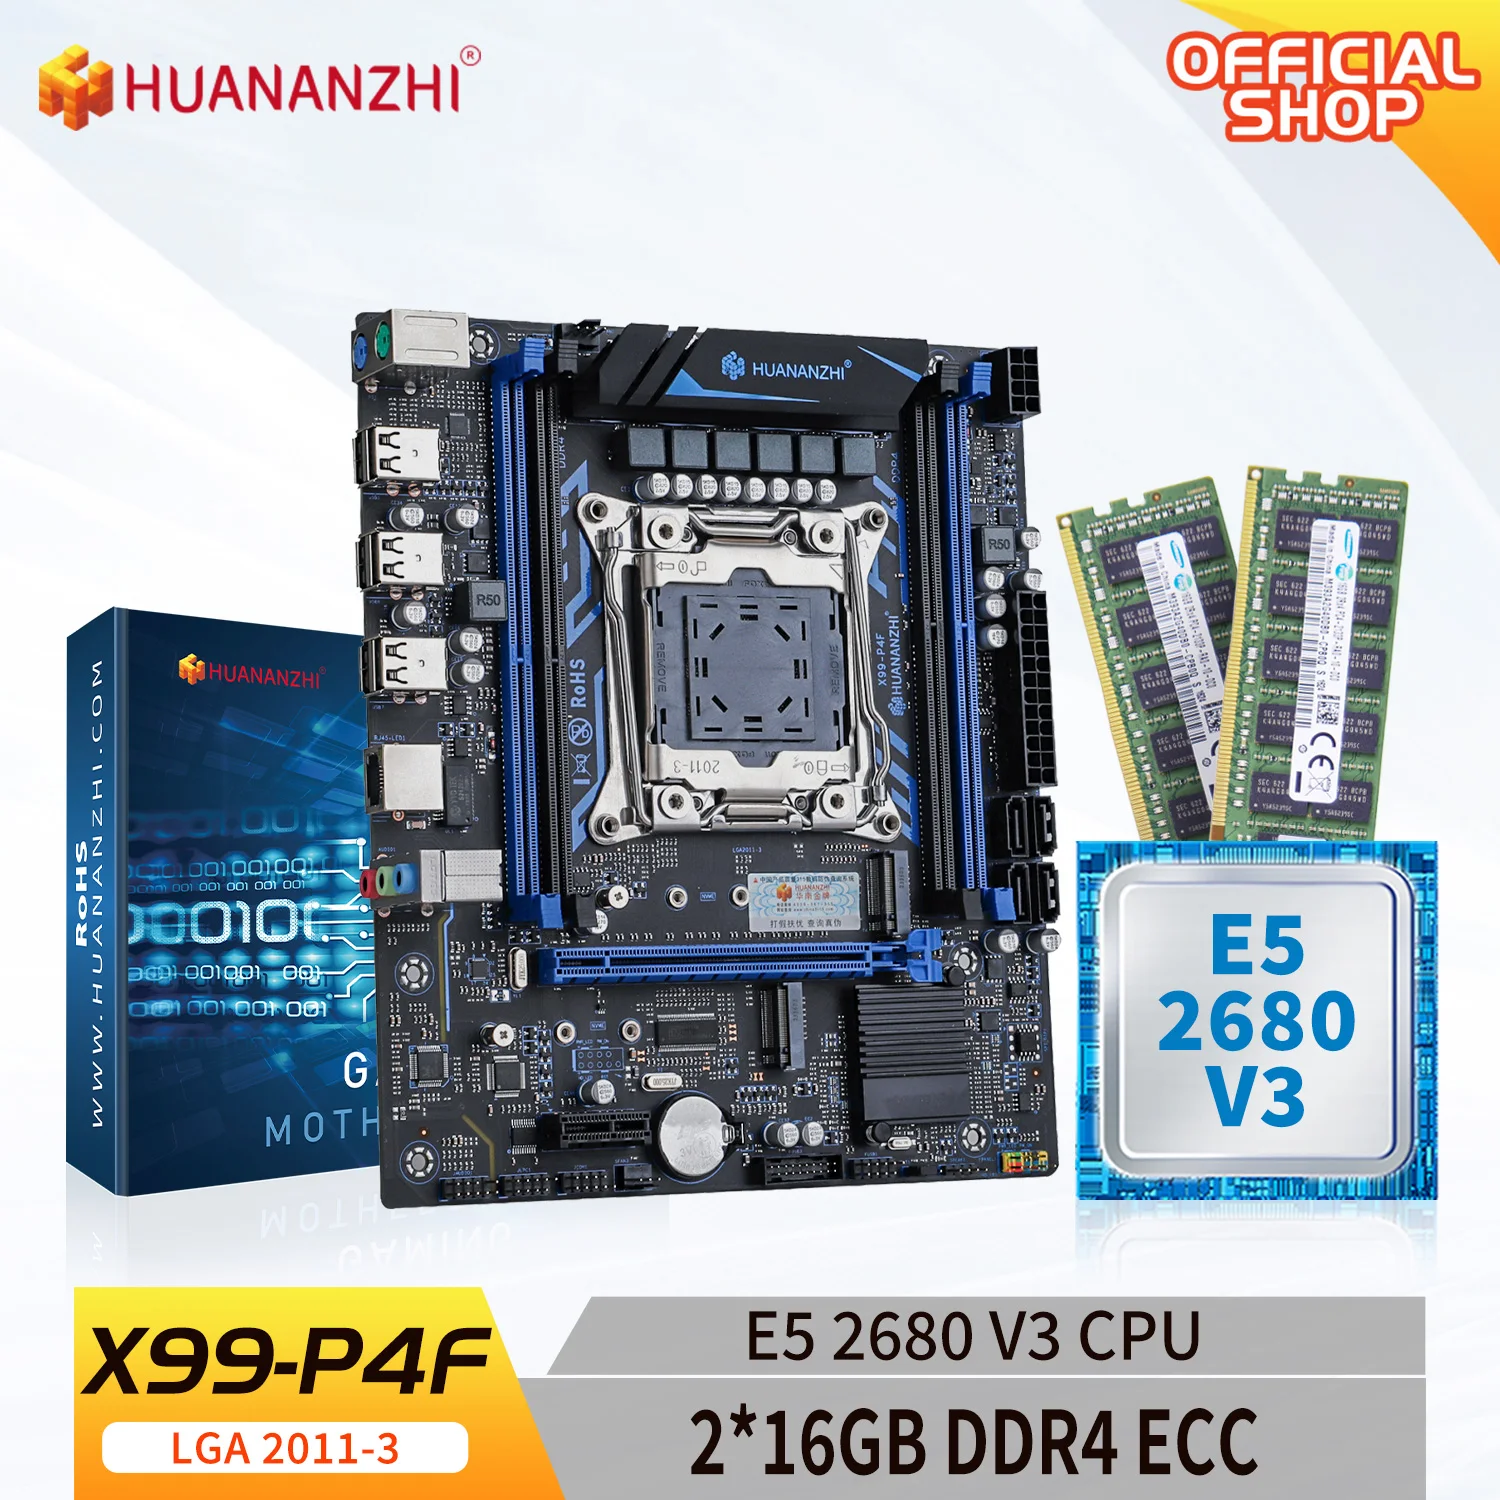 

HUANANZHI X99 P4F LGA 2011-3 XEON X99 Motherboard with Intel E5 2680 V3 with 2*16G DDR4 RECC Memory Combo Kit Set NVME